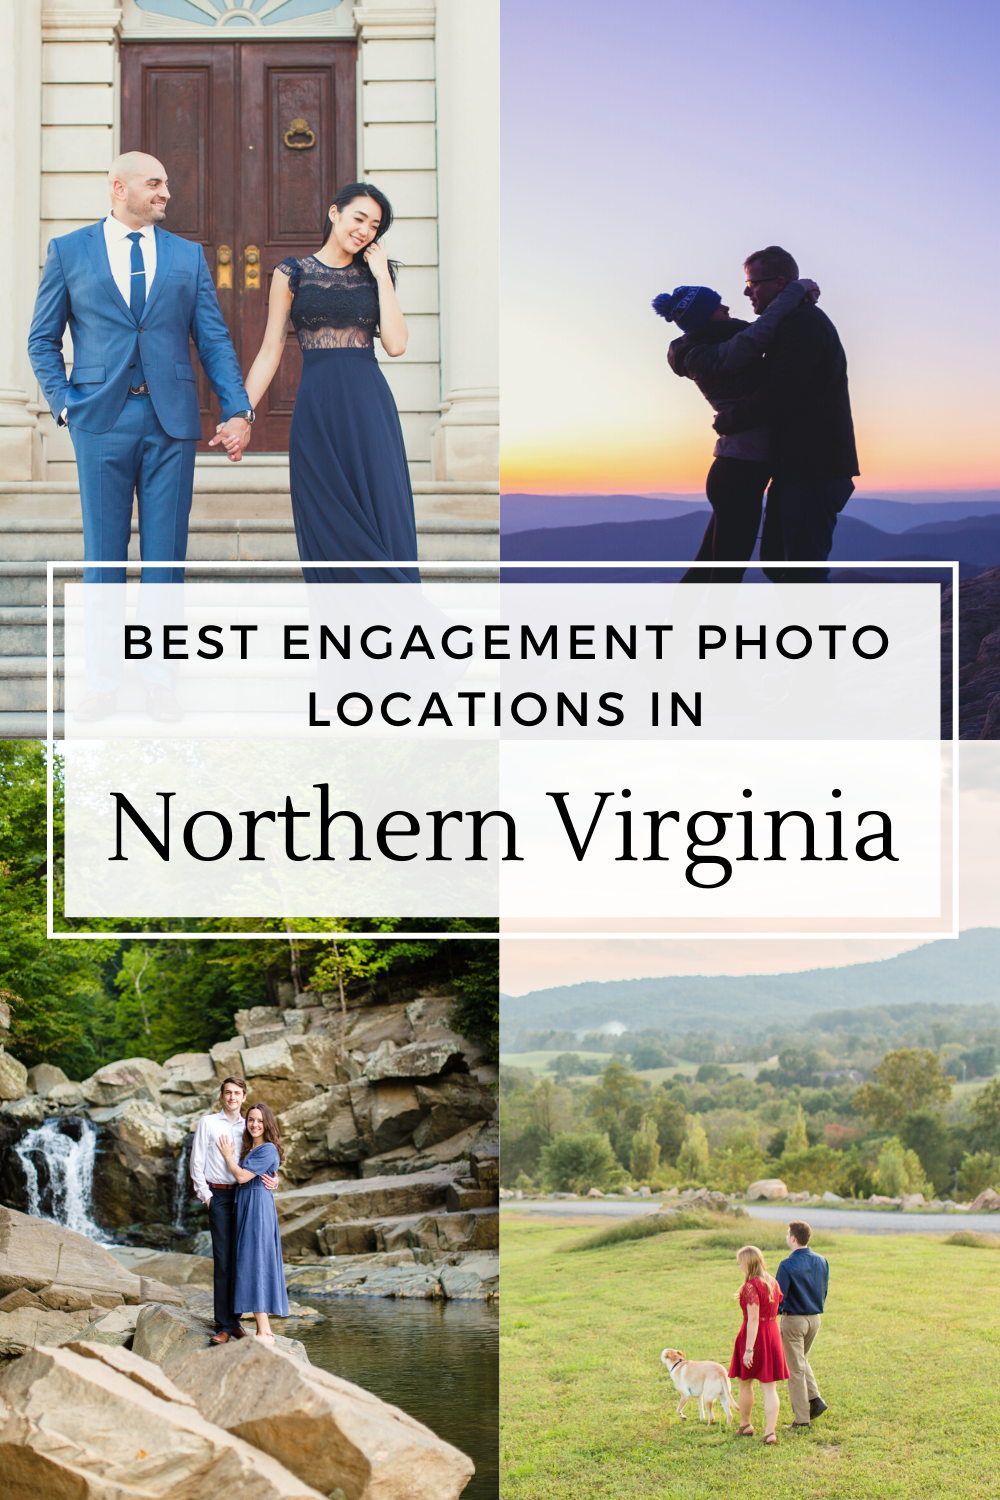 4 images best - nova engagements.png